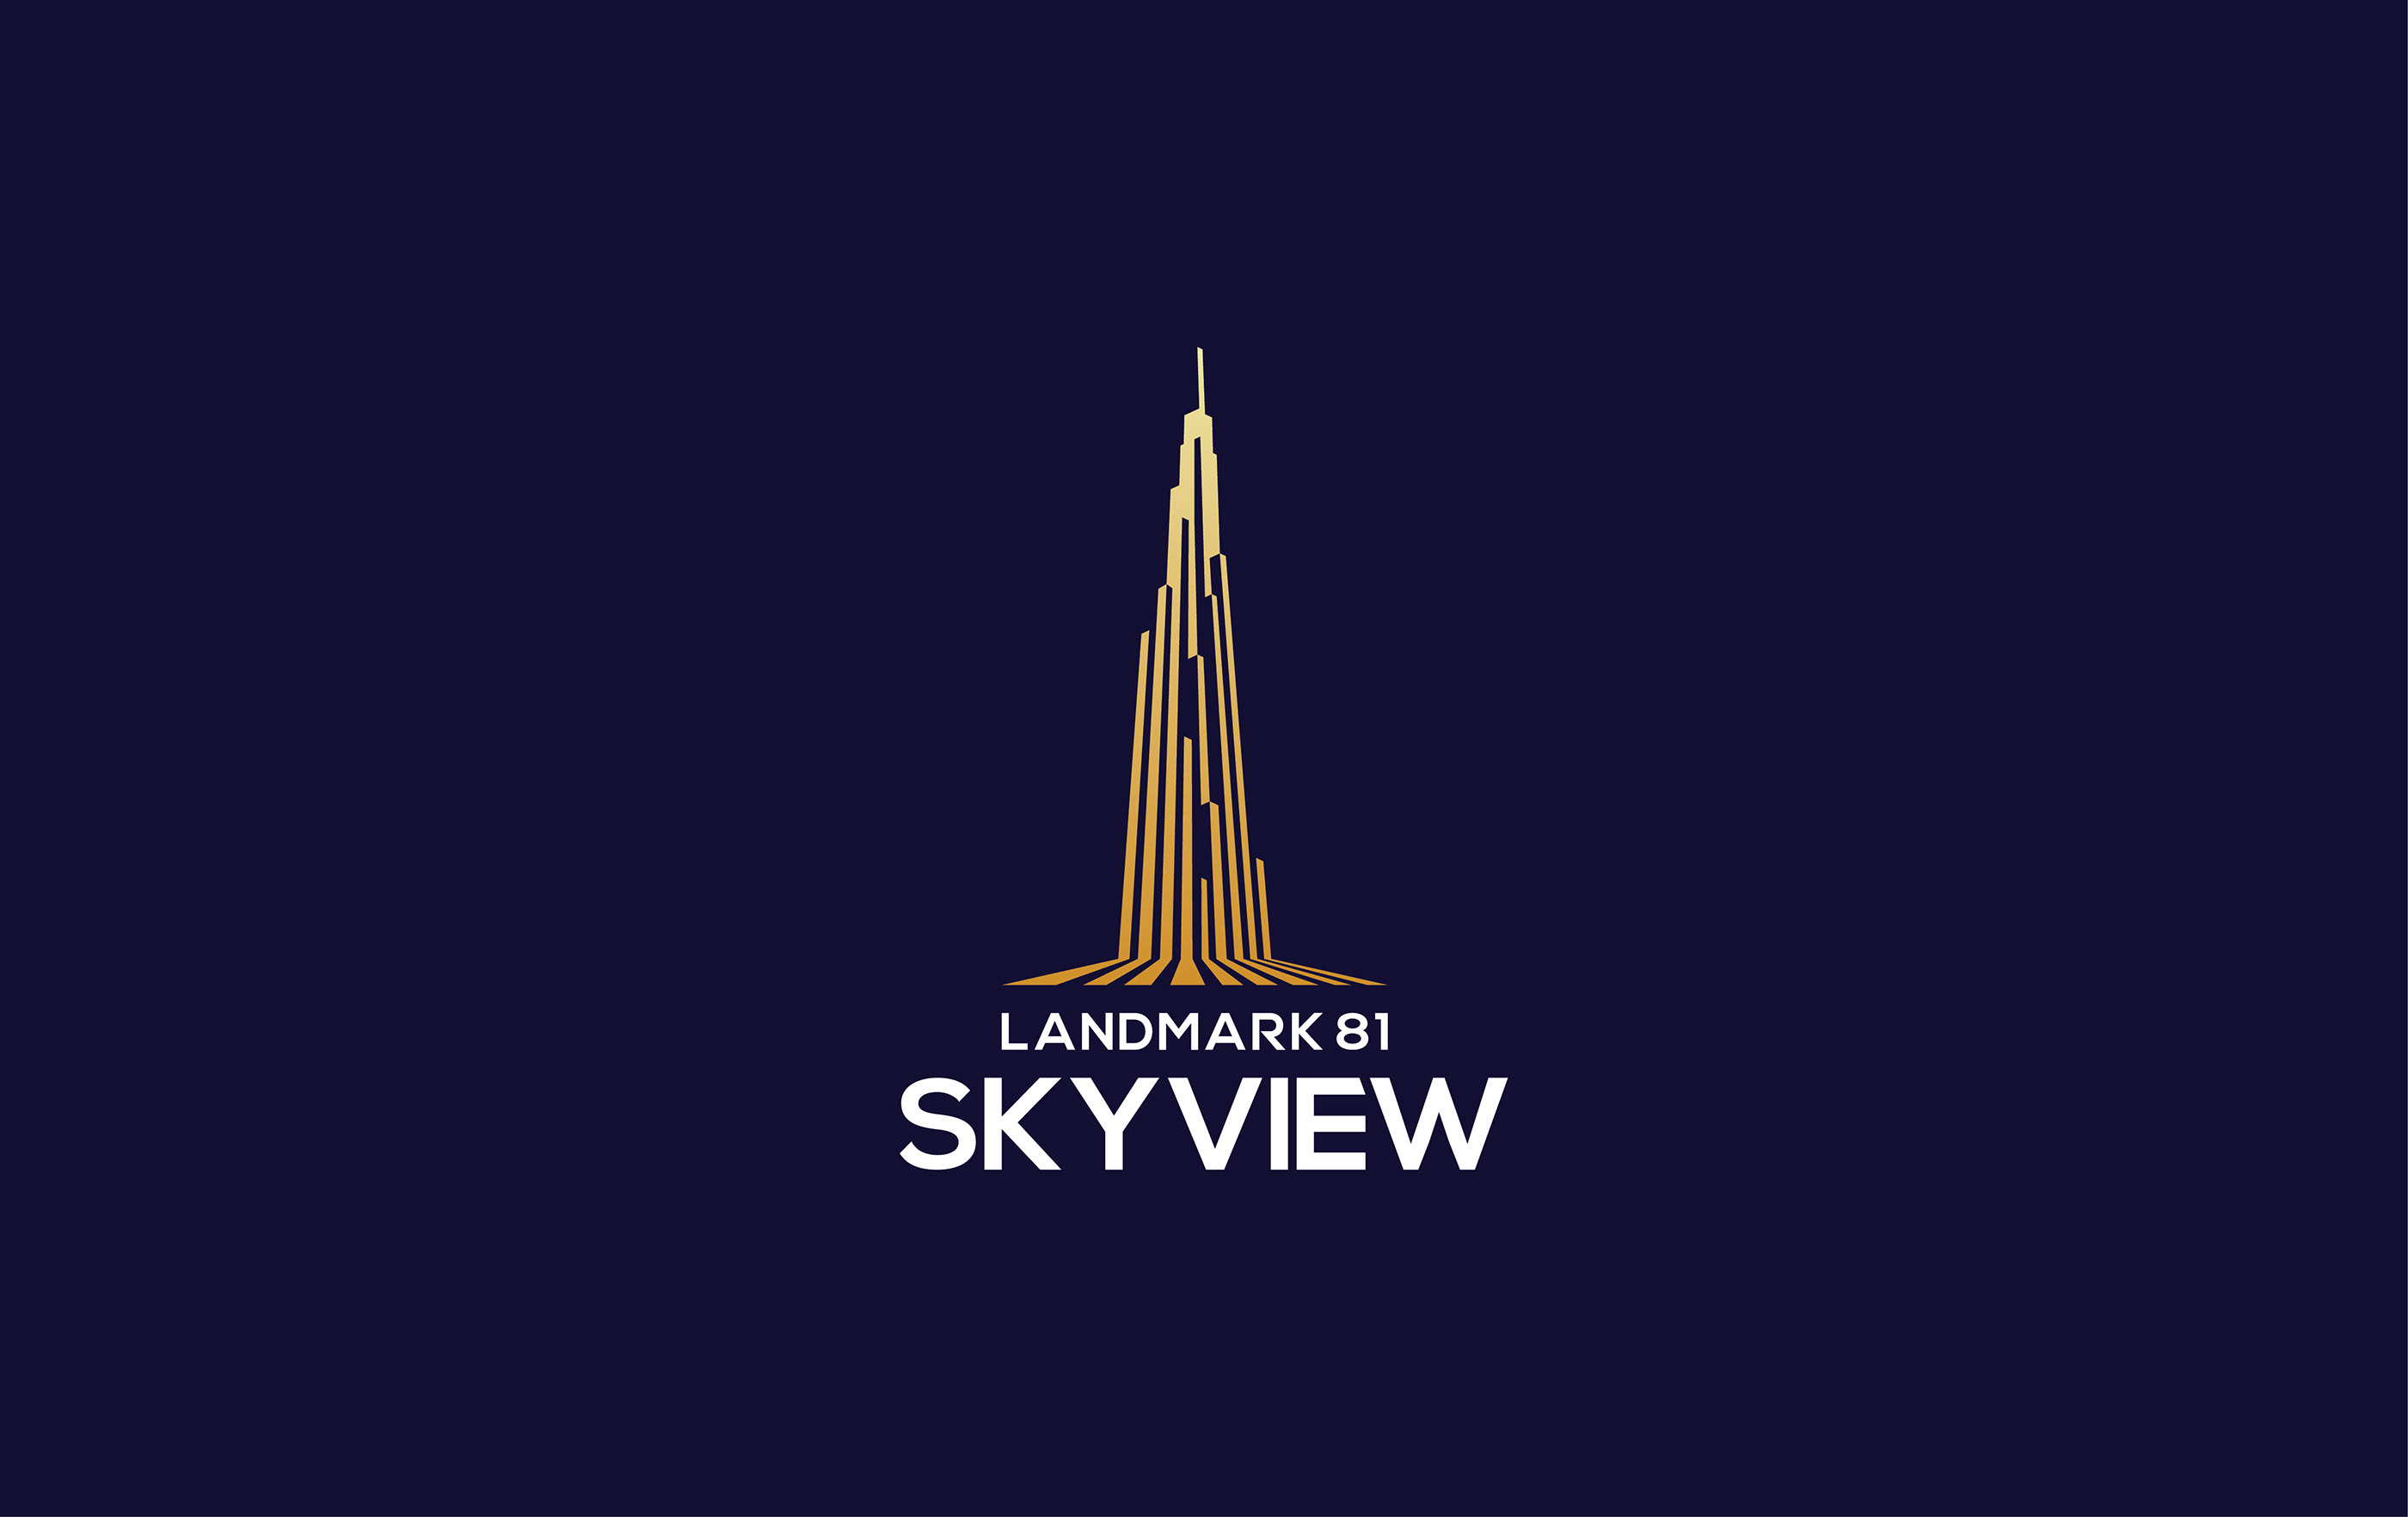 Branding for Landmark 81 Skyview, the Highest Observatory in Southeast Asia